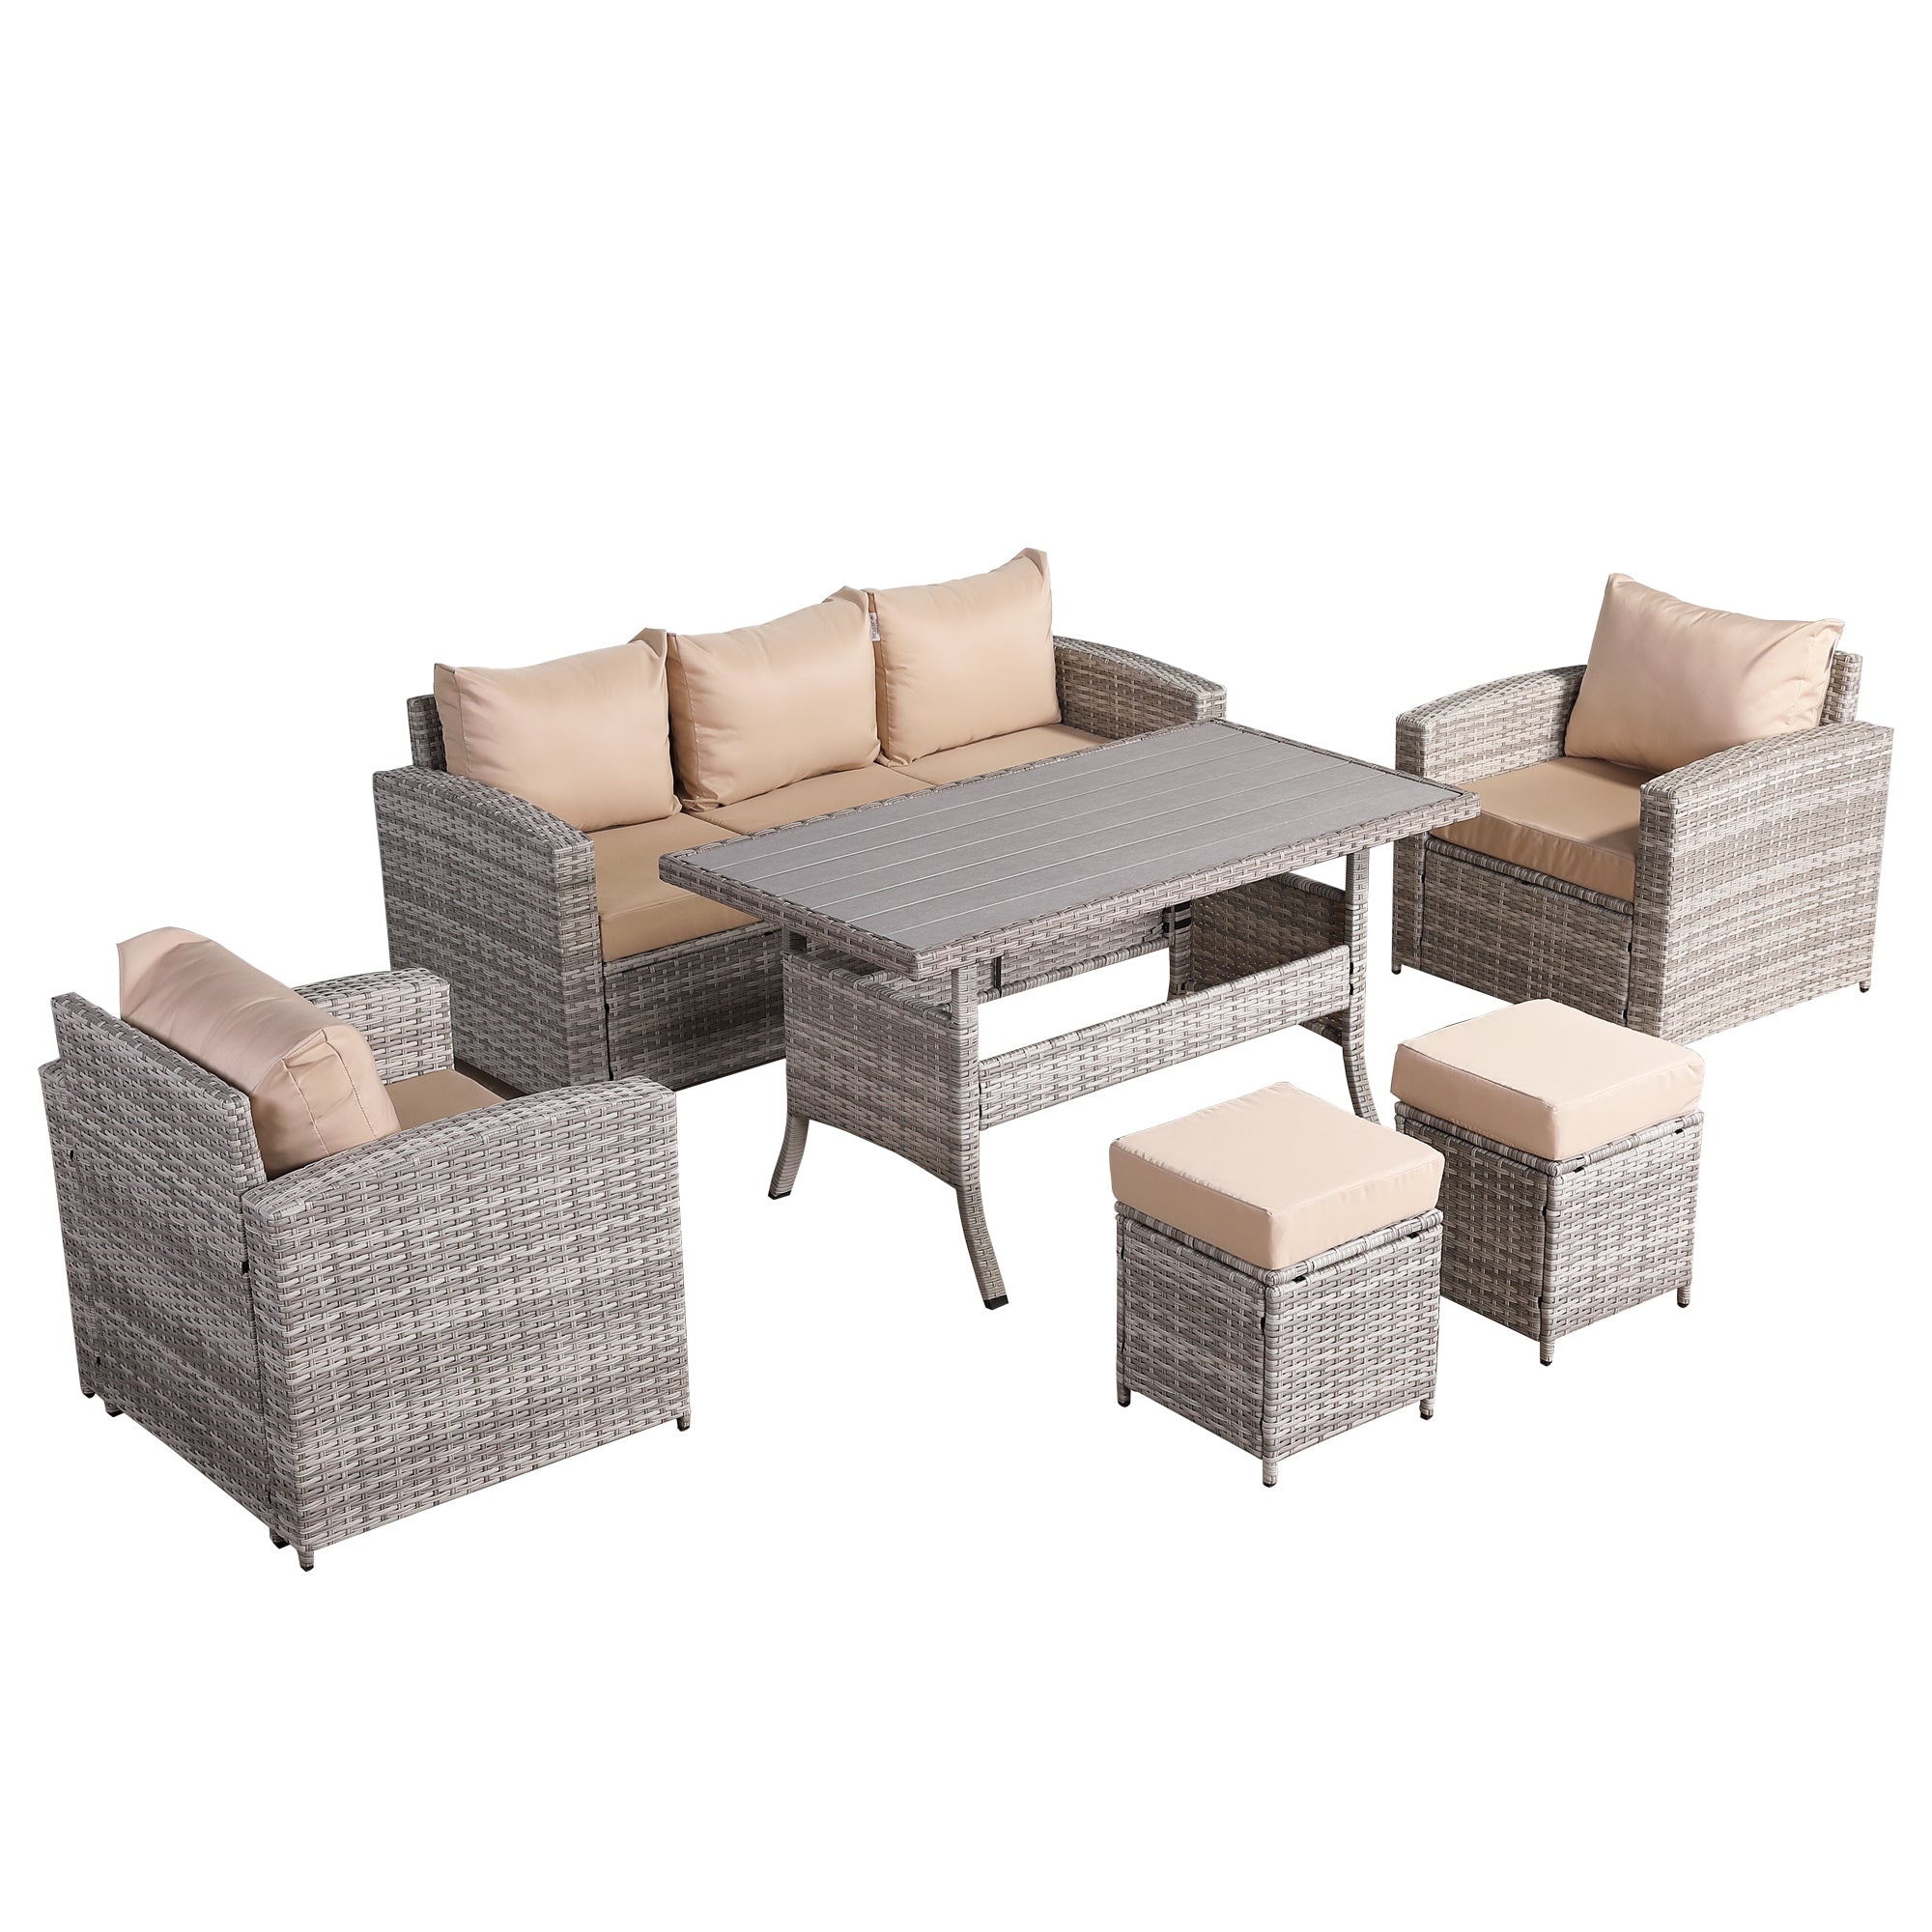 Eton Range High Back Dining Corner Sofa Set in Light Grey Weave with Dinning Table